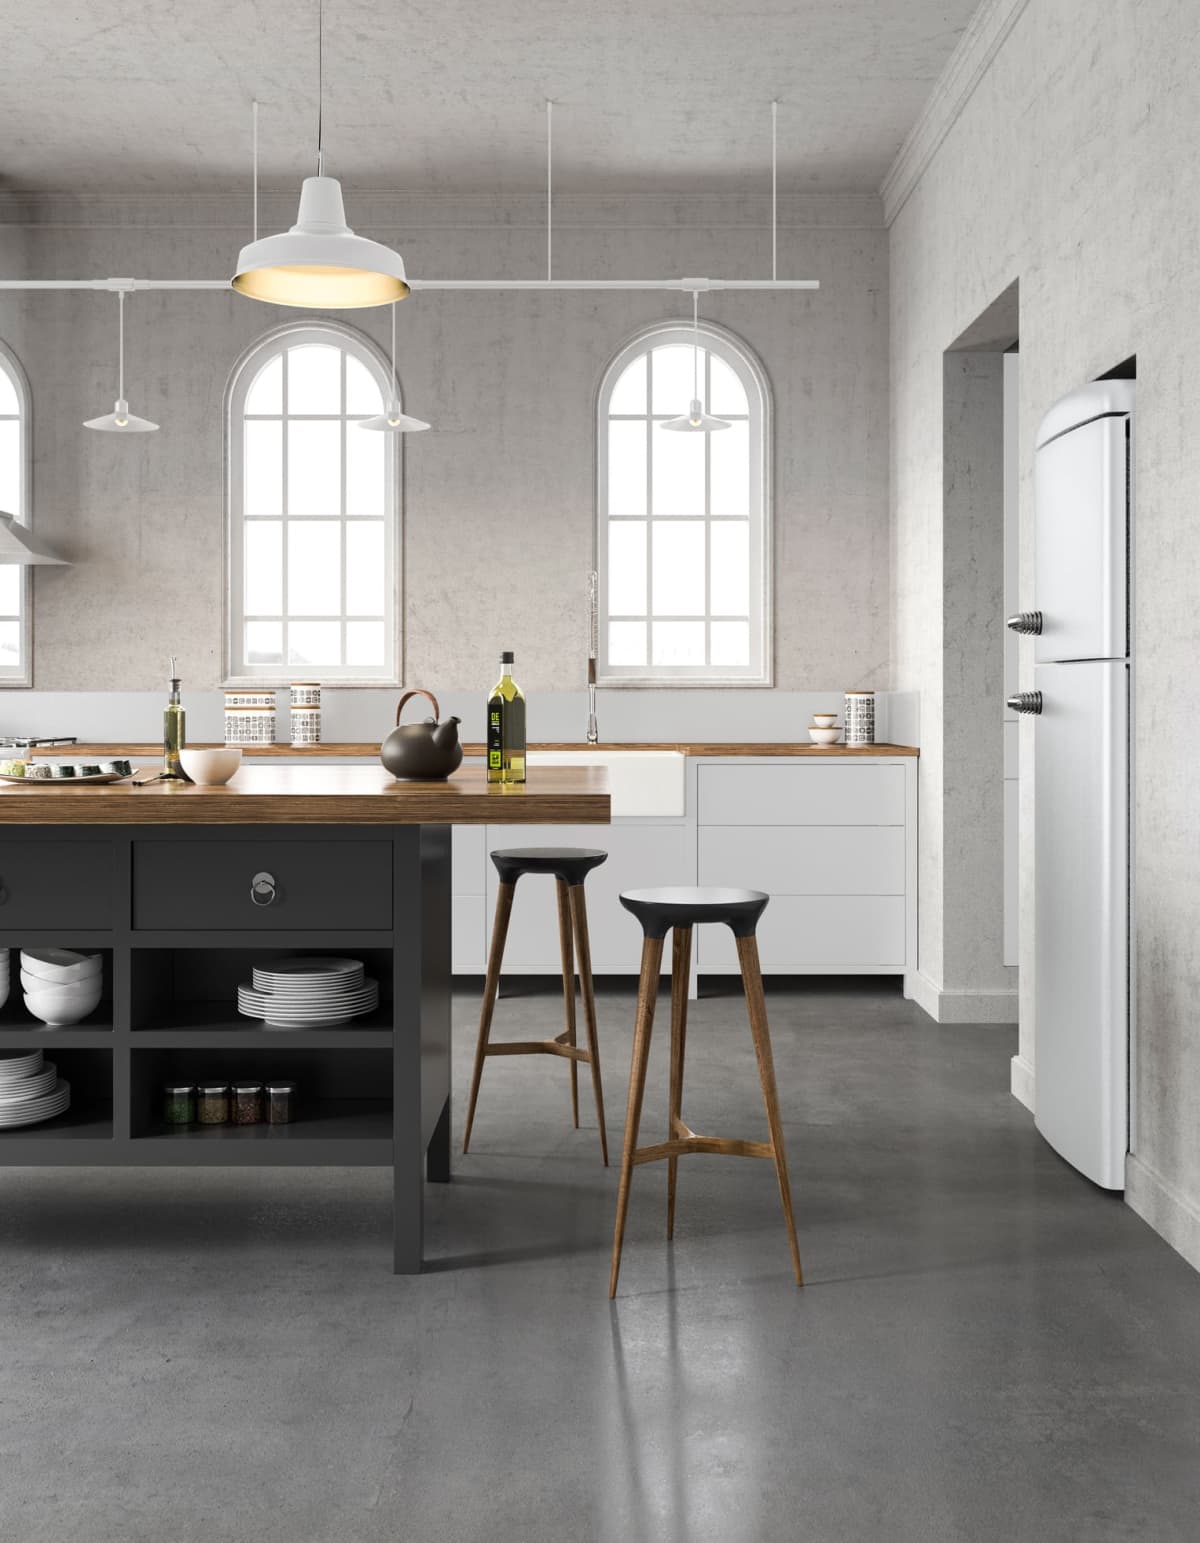 Modern basement kitchen featuring concrete flooring